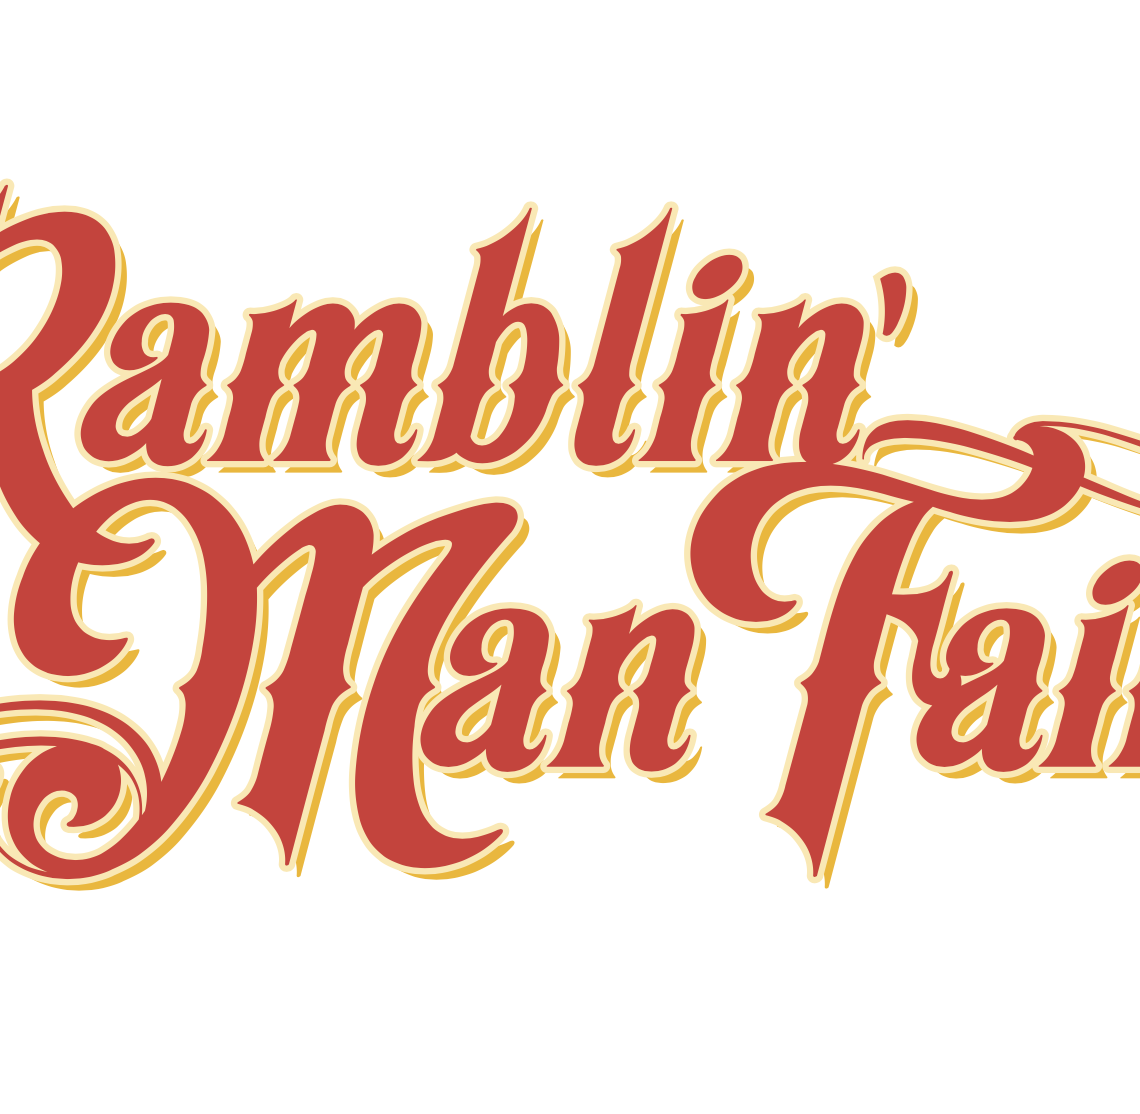 Who Should I Look Out For At Ramblin’ Man 2019?